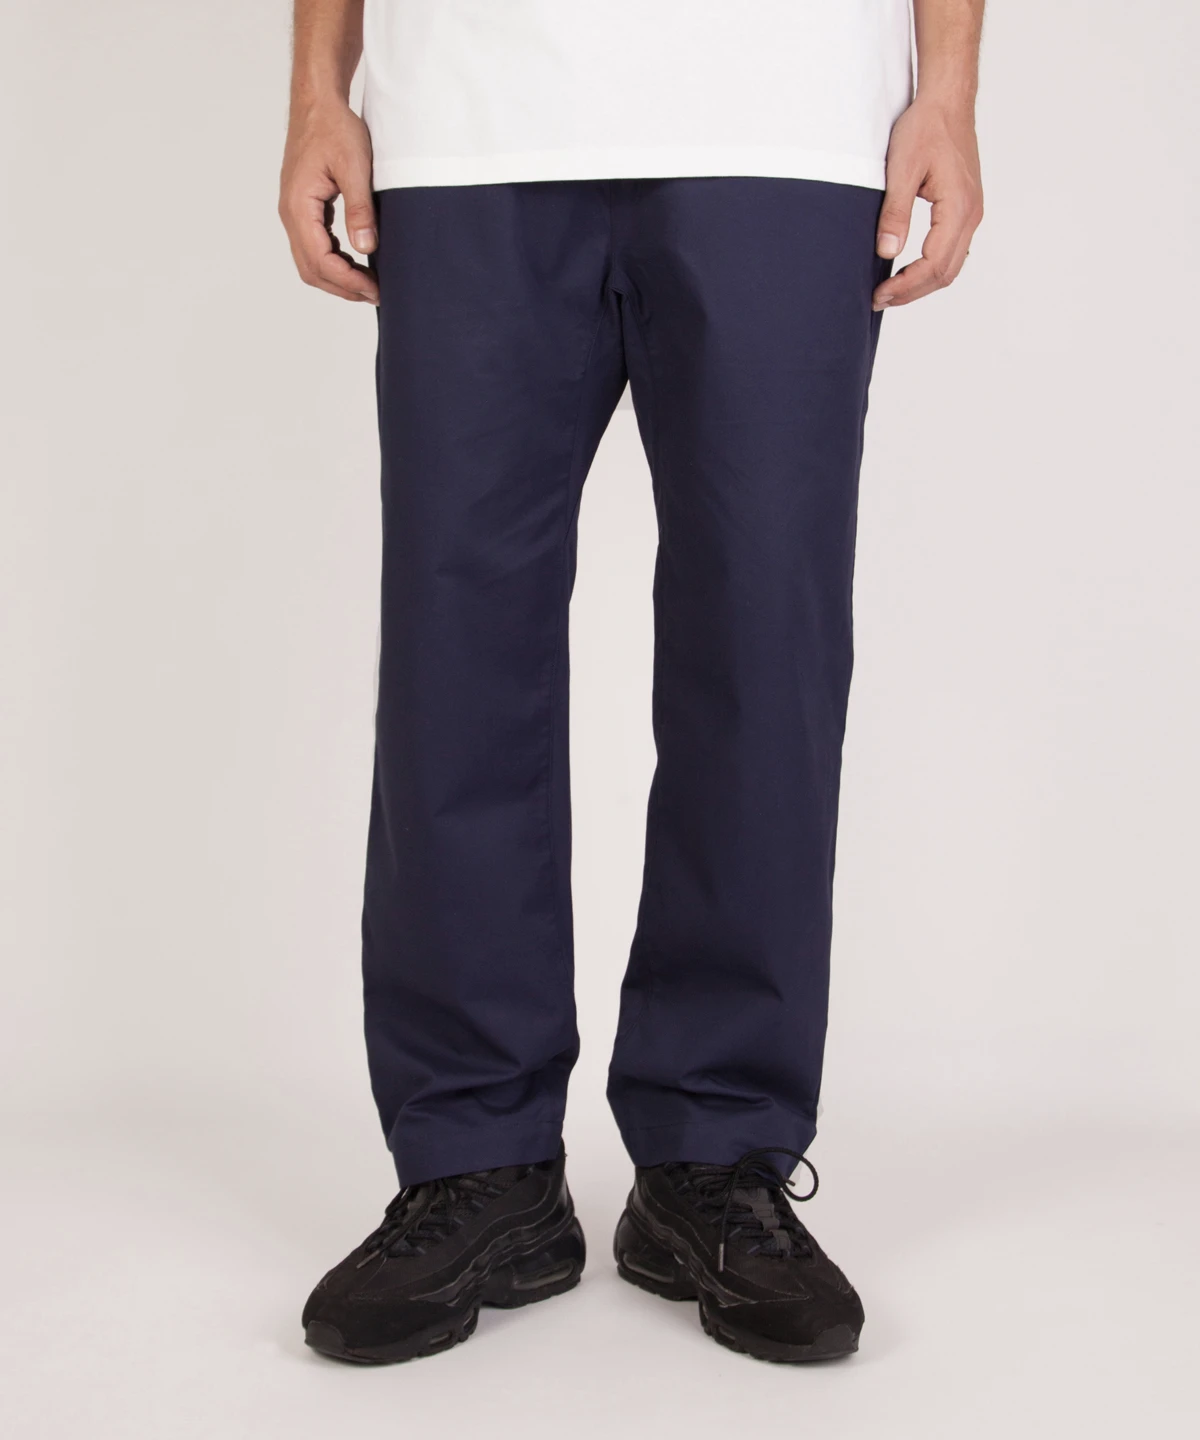 grindlondon 100% cotton relaxed elasticated waist trouser navy